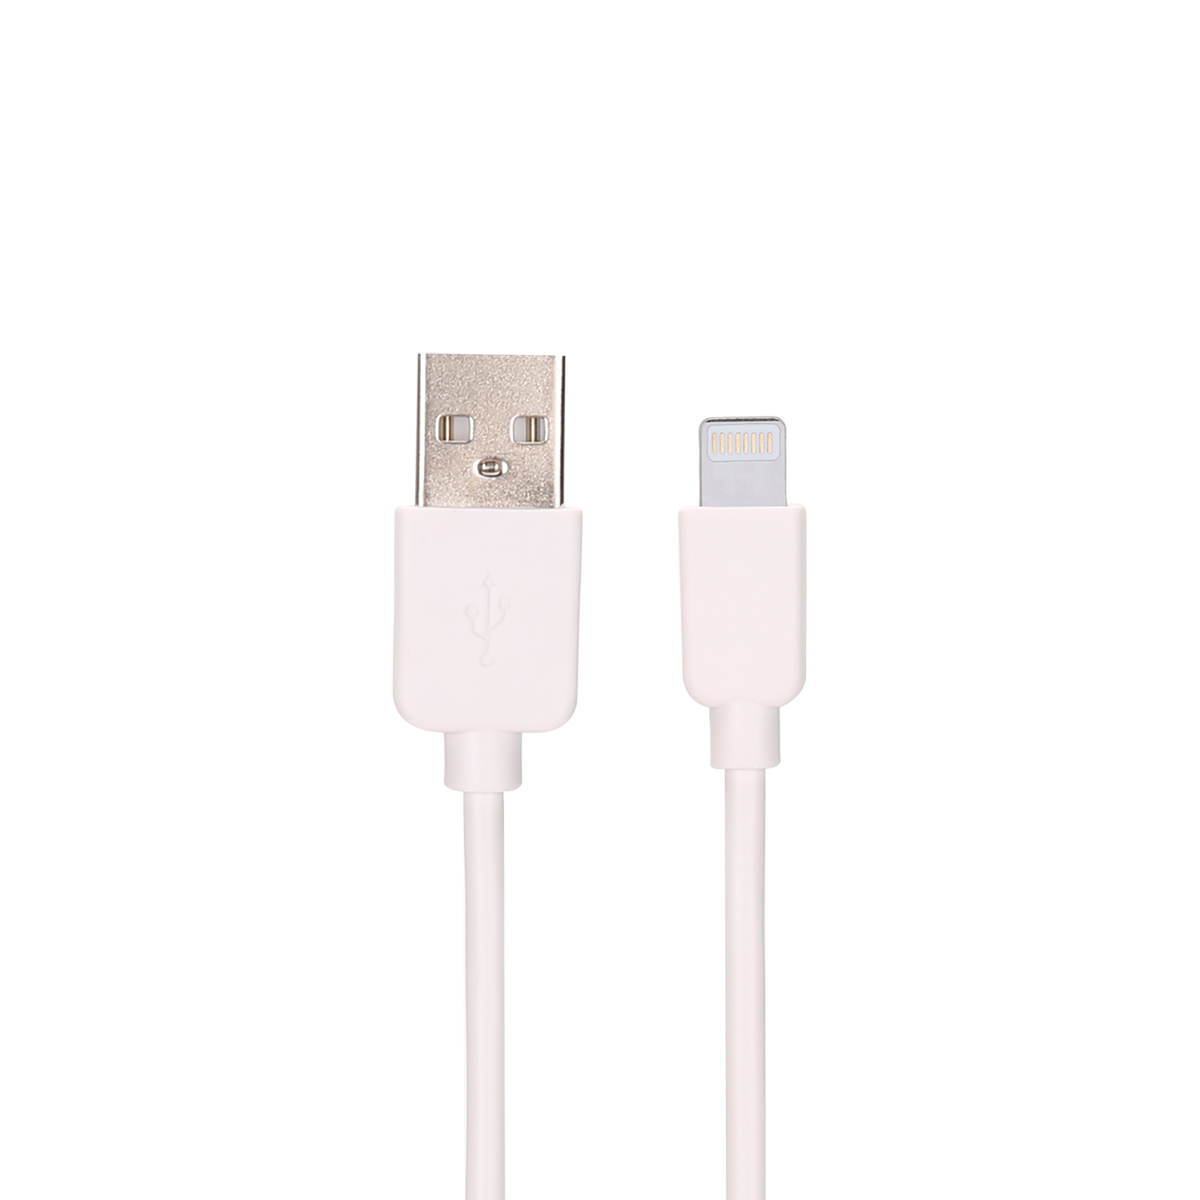 Кабель USB - 8pin MUJU MJ-55 белый (2А, для iPhone5/6/7) 1м